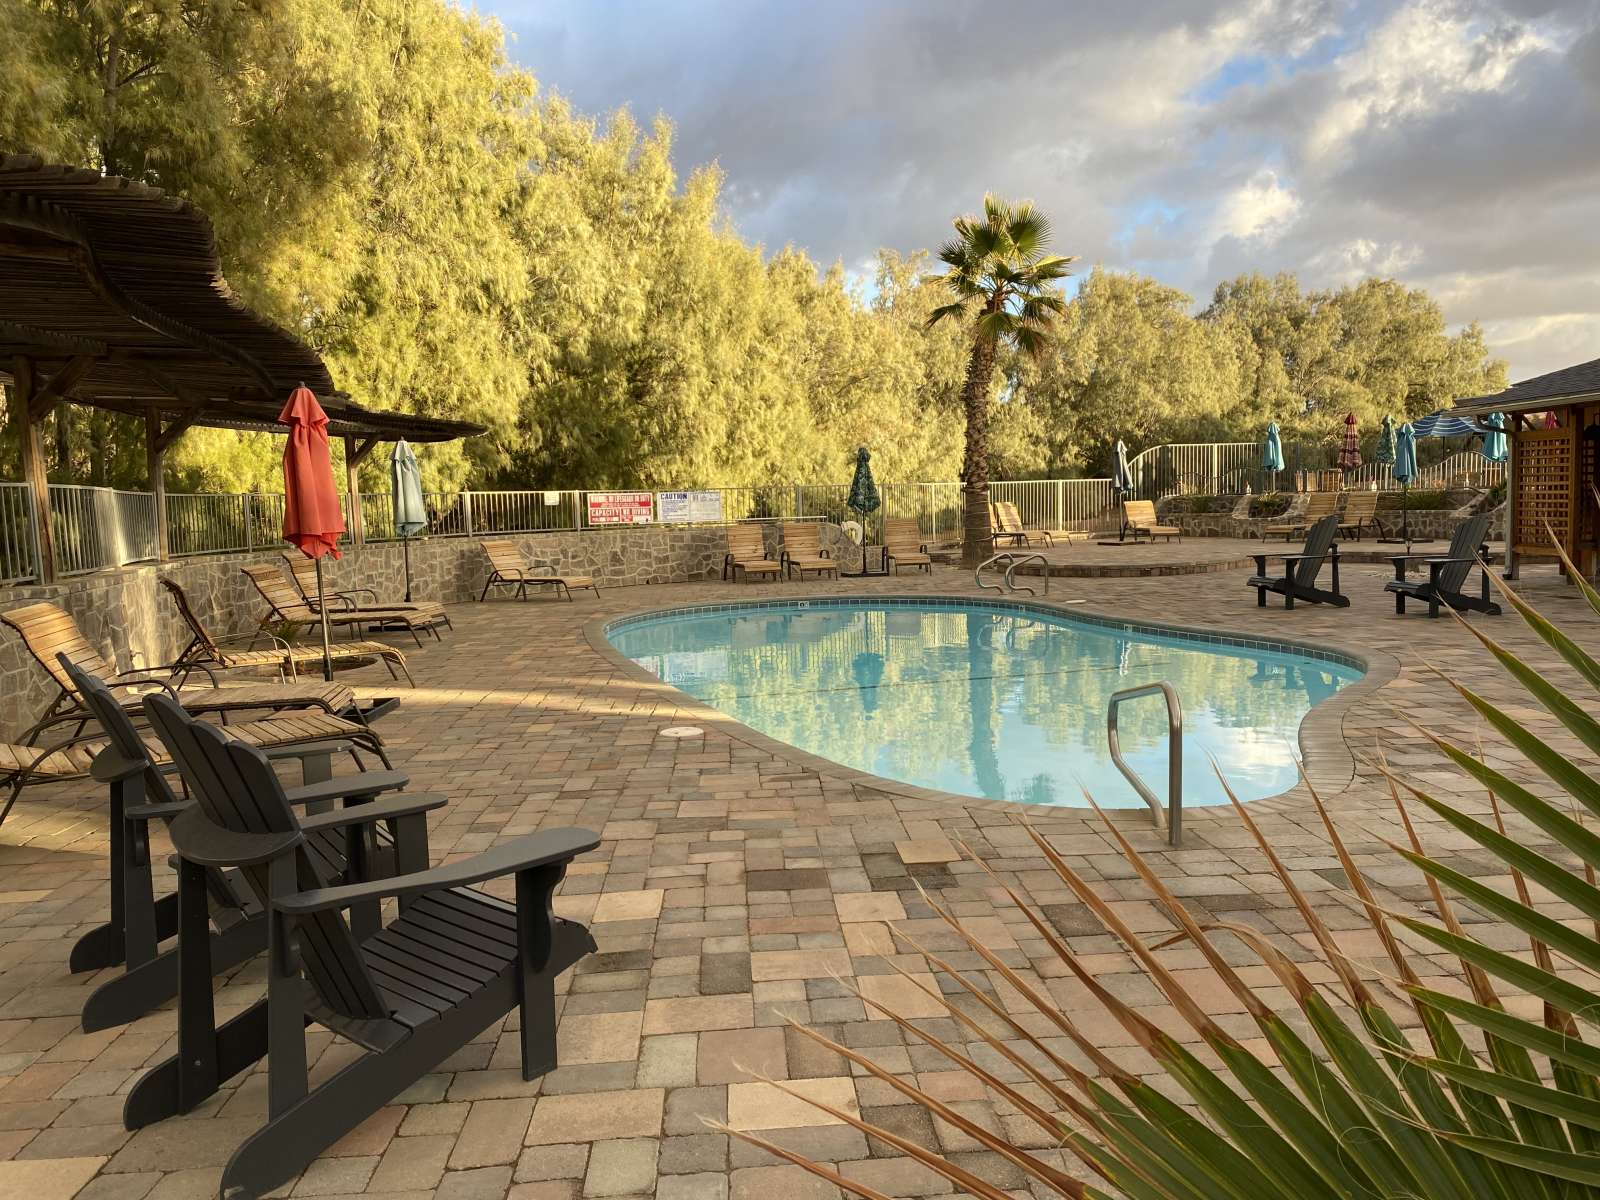 Mercey Hot Springs Resort - Hipcamp in South Dos Palos, California